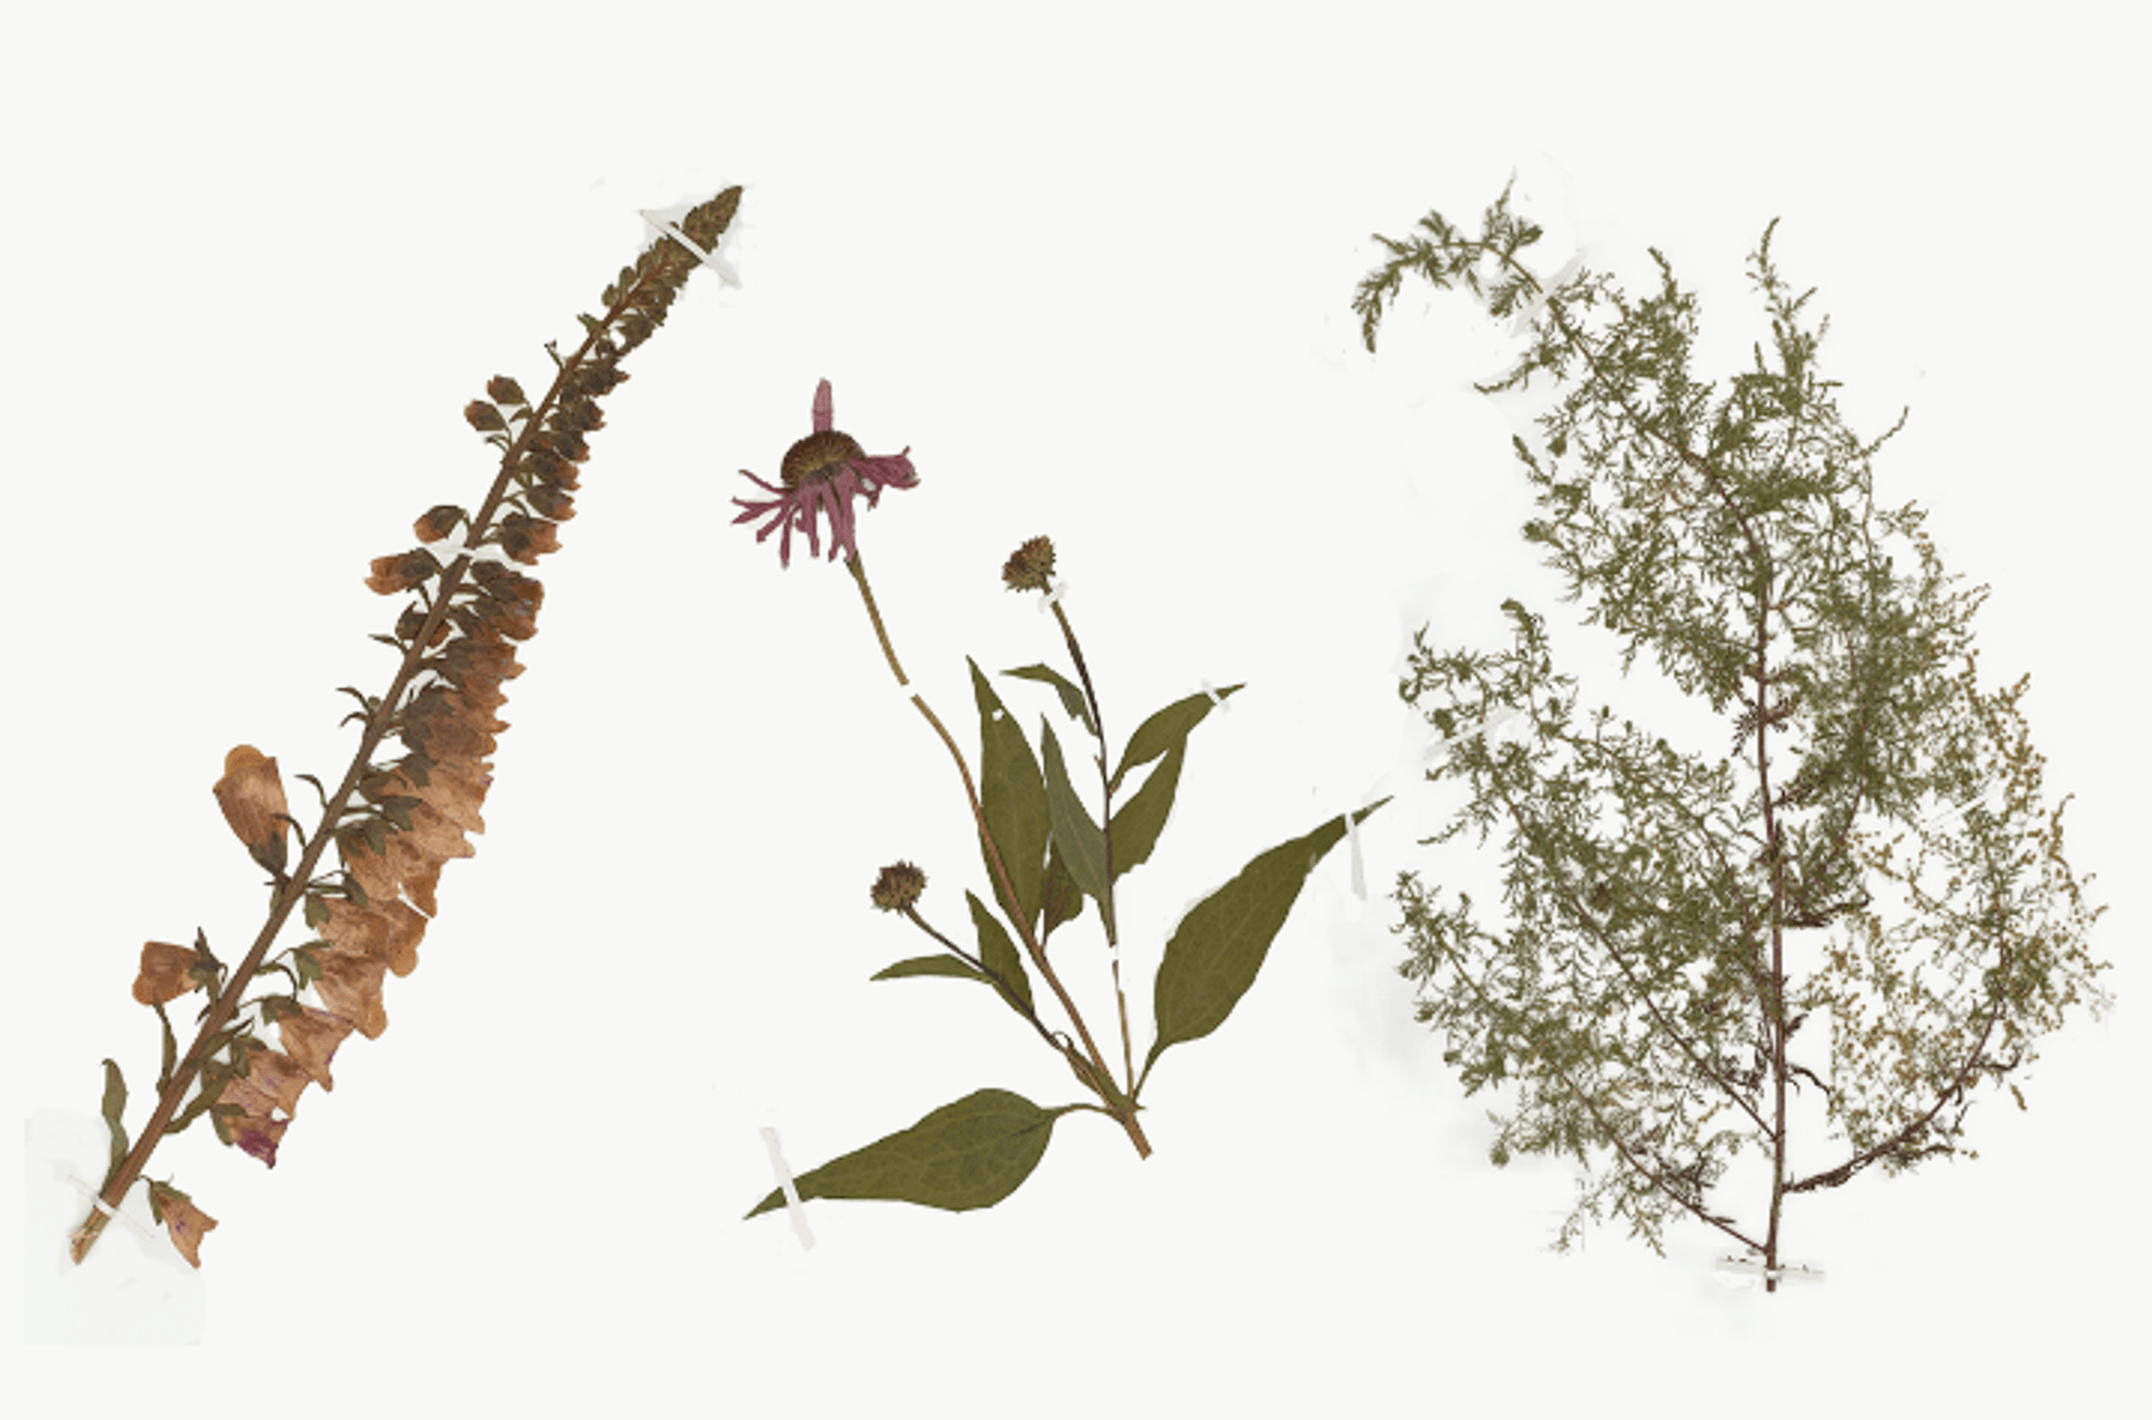 Specimens held at the University’s Medicinal Plant Herbarium